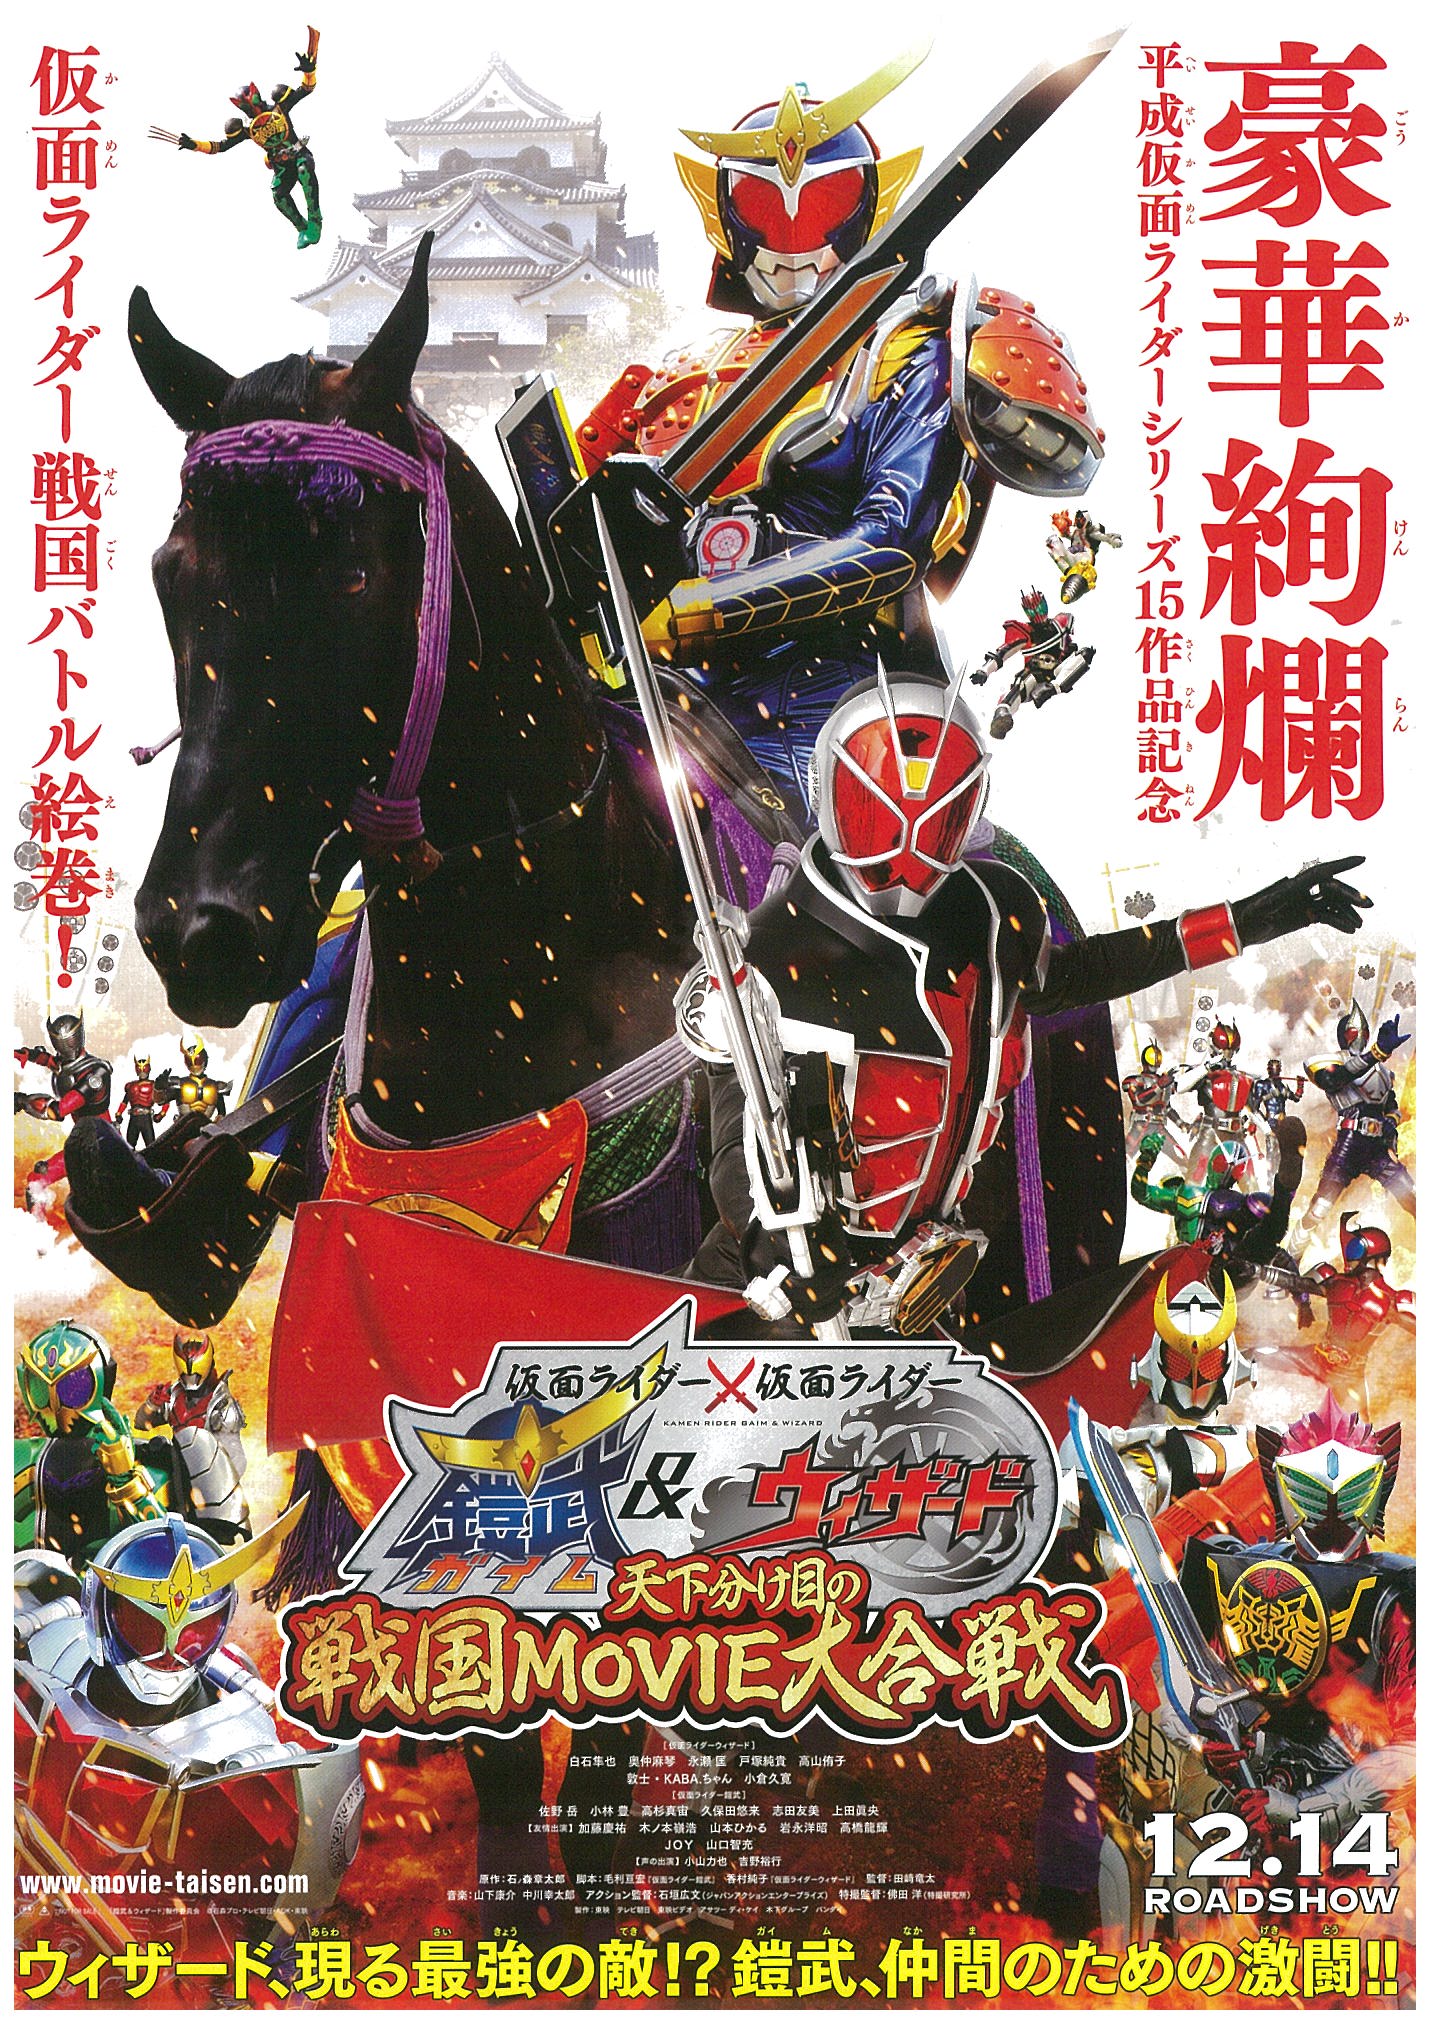 Kamen rider x kamen rider gaim & wizard: tenkawakeme no sengoku movie daigassen - Kamen rider x kamen rider gaim &amp; wizard: tenkawakeme no sengoku movie daigassen